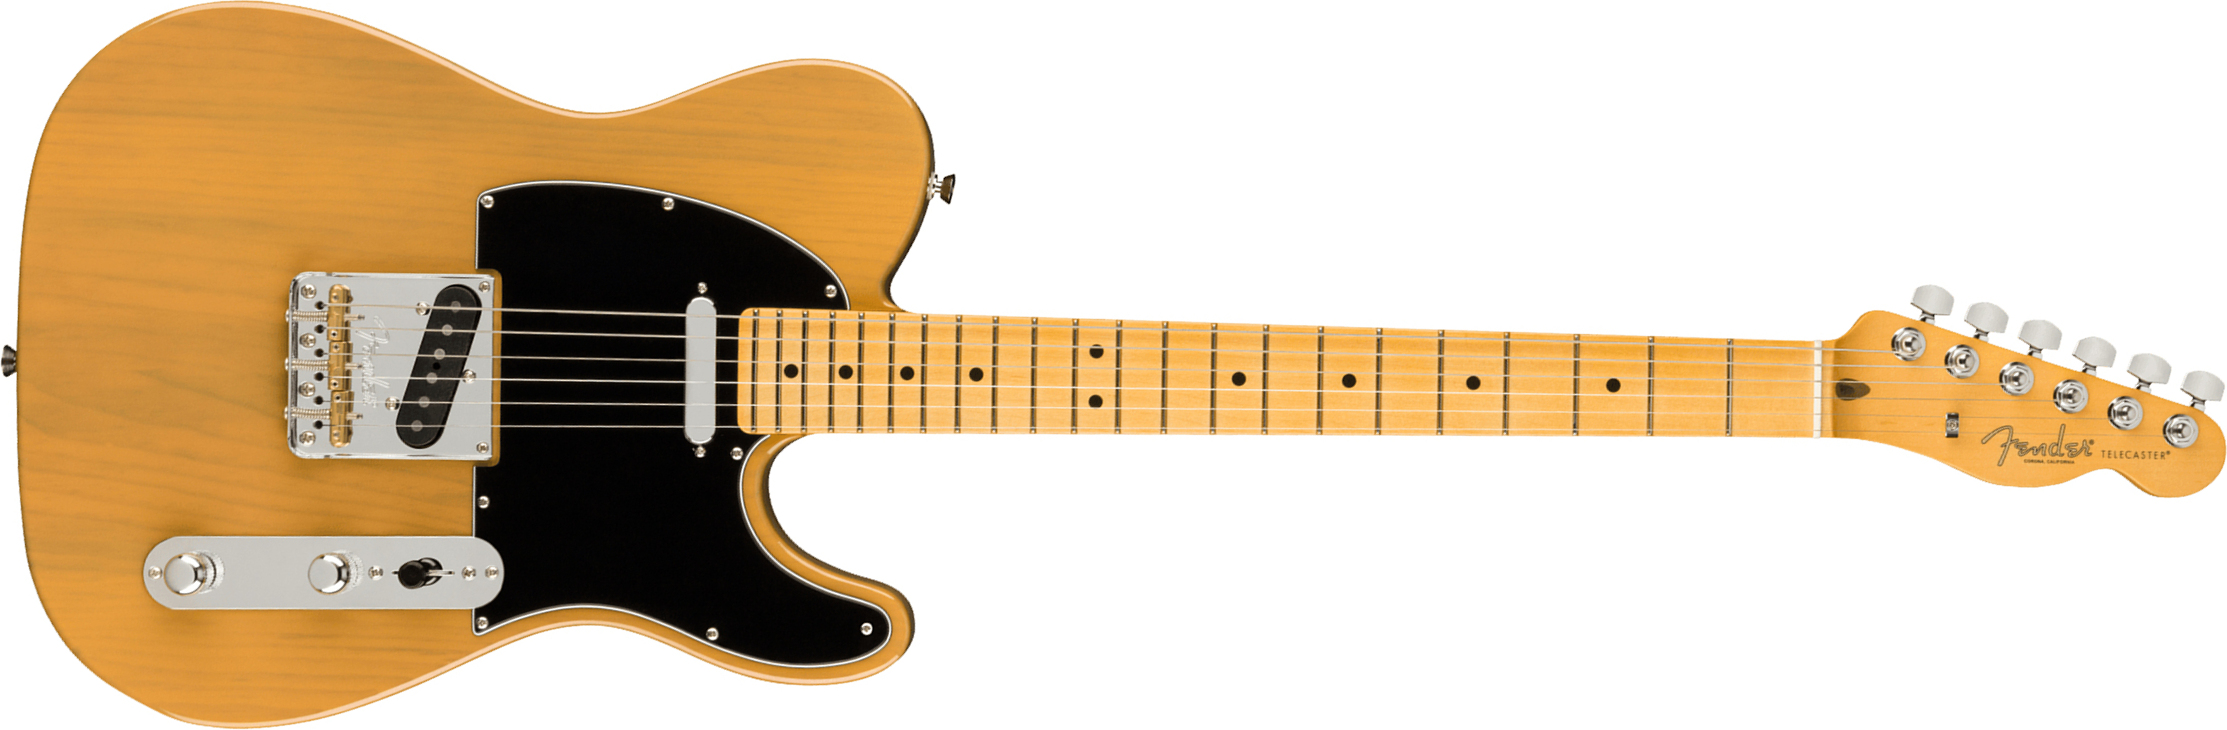 Fender Tele American Professional Ii Usa Mn - Butterscotch Blonde - Guitarra eléctrica con forma de tel - Main picture